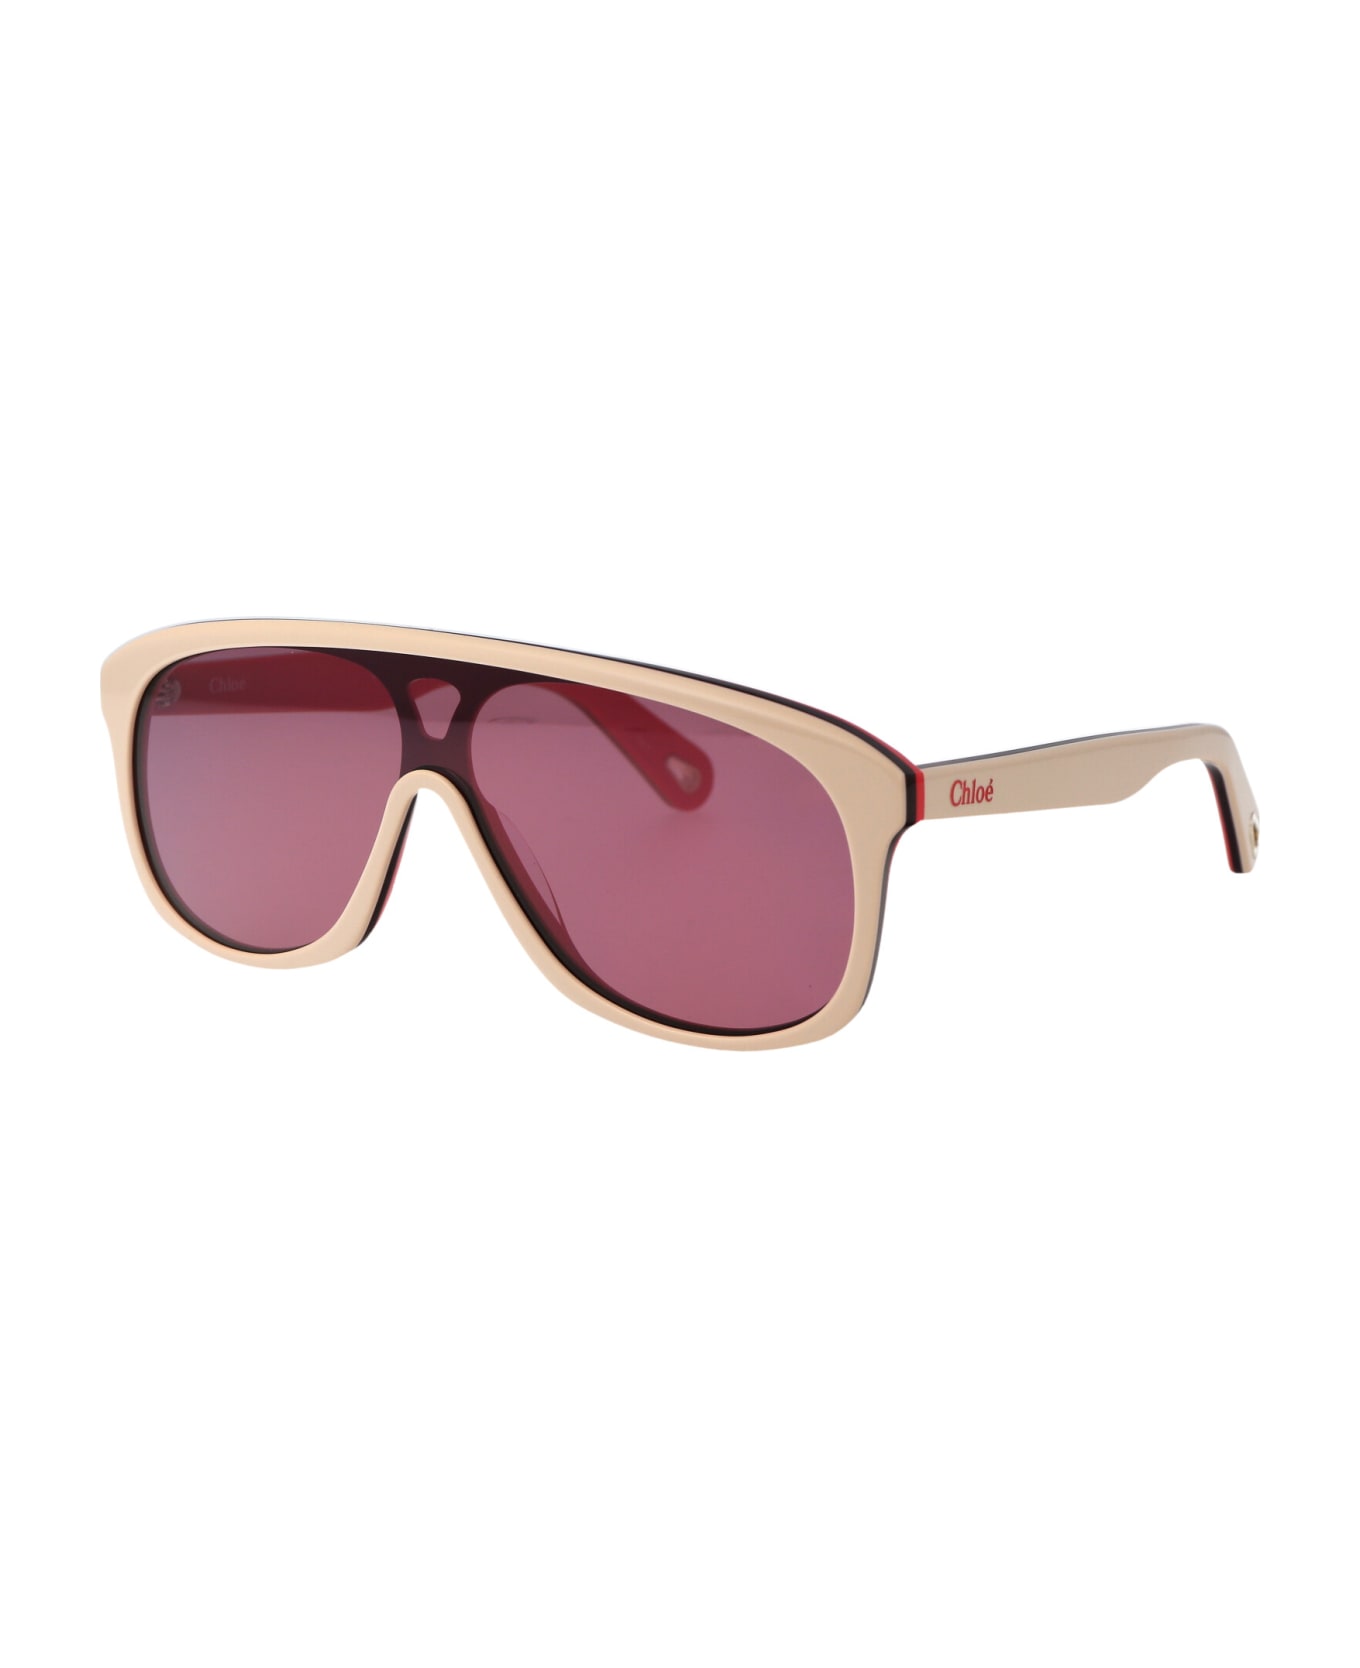 Chloé Eyewear Ch0212s Sunglasses - 005 IVORY IVORY PINK サングラス